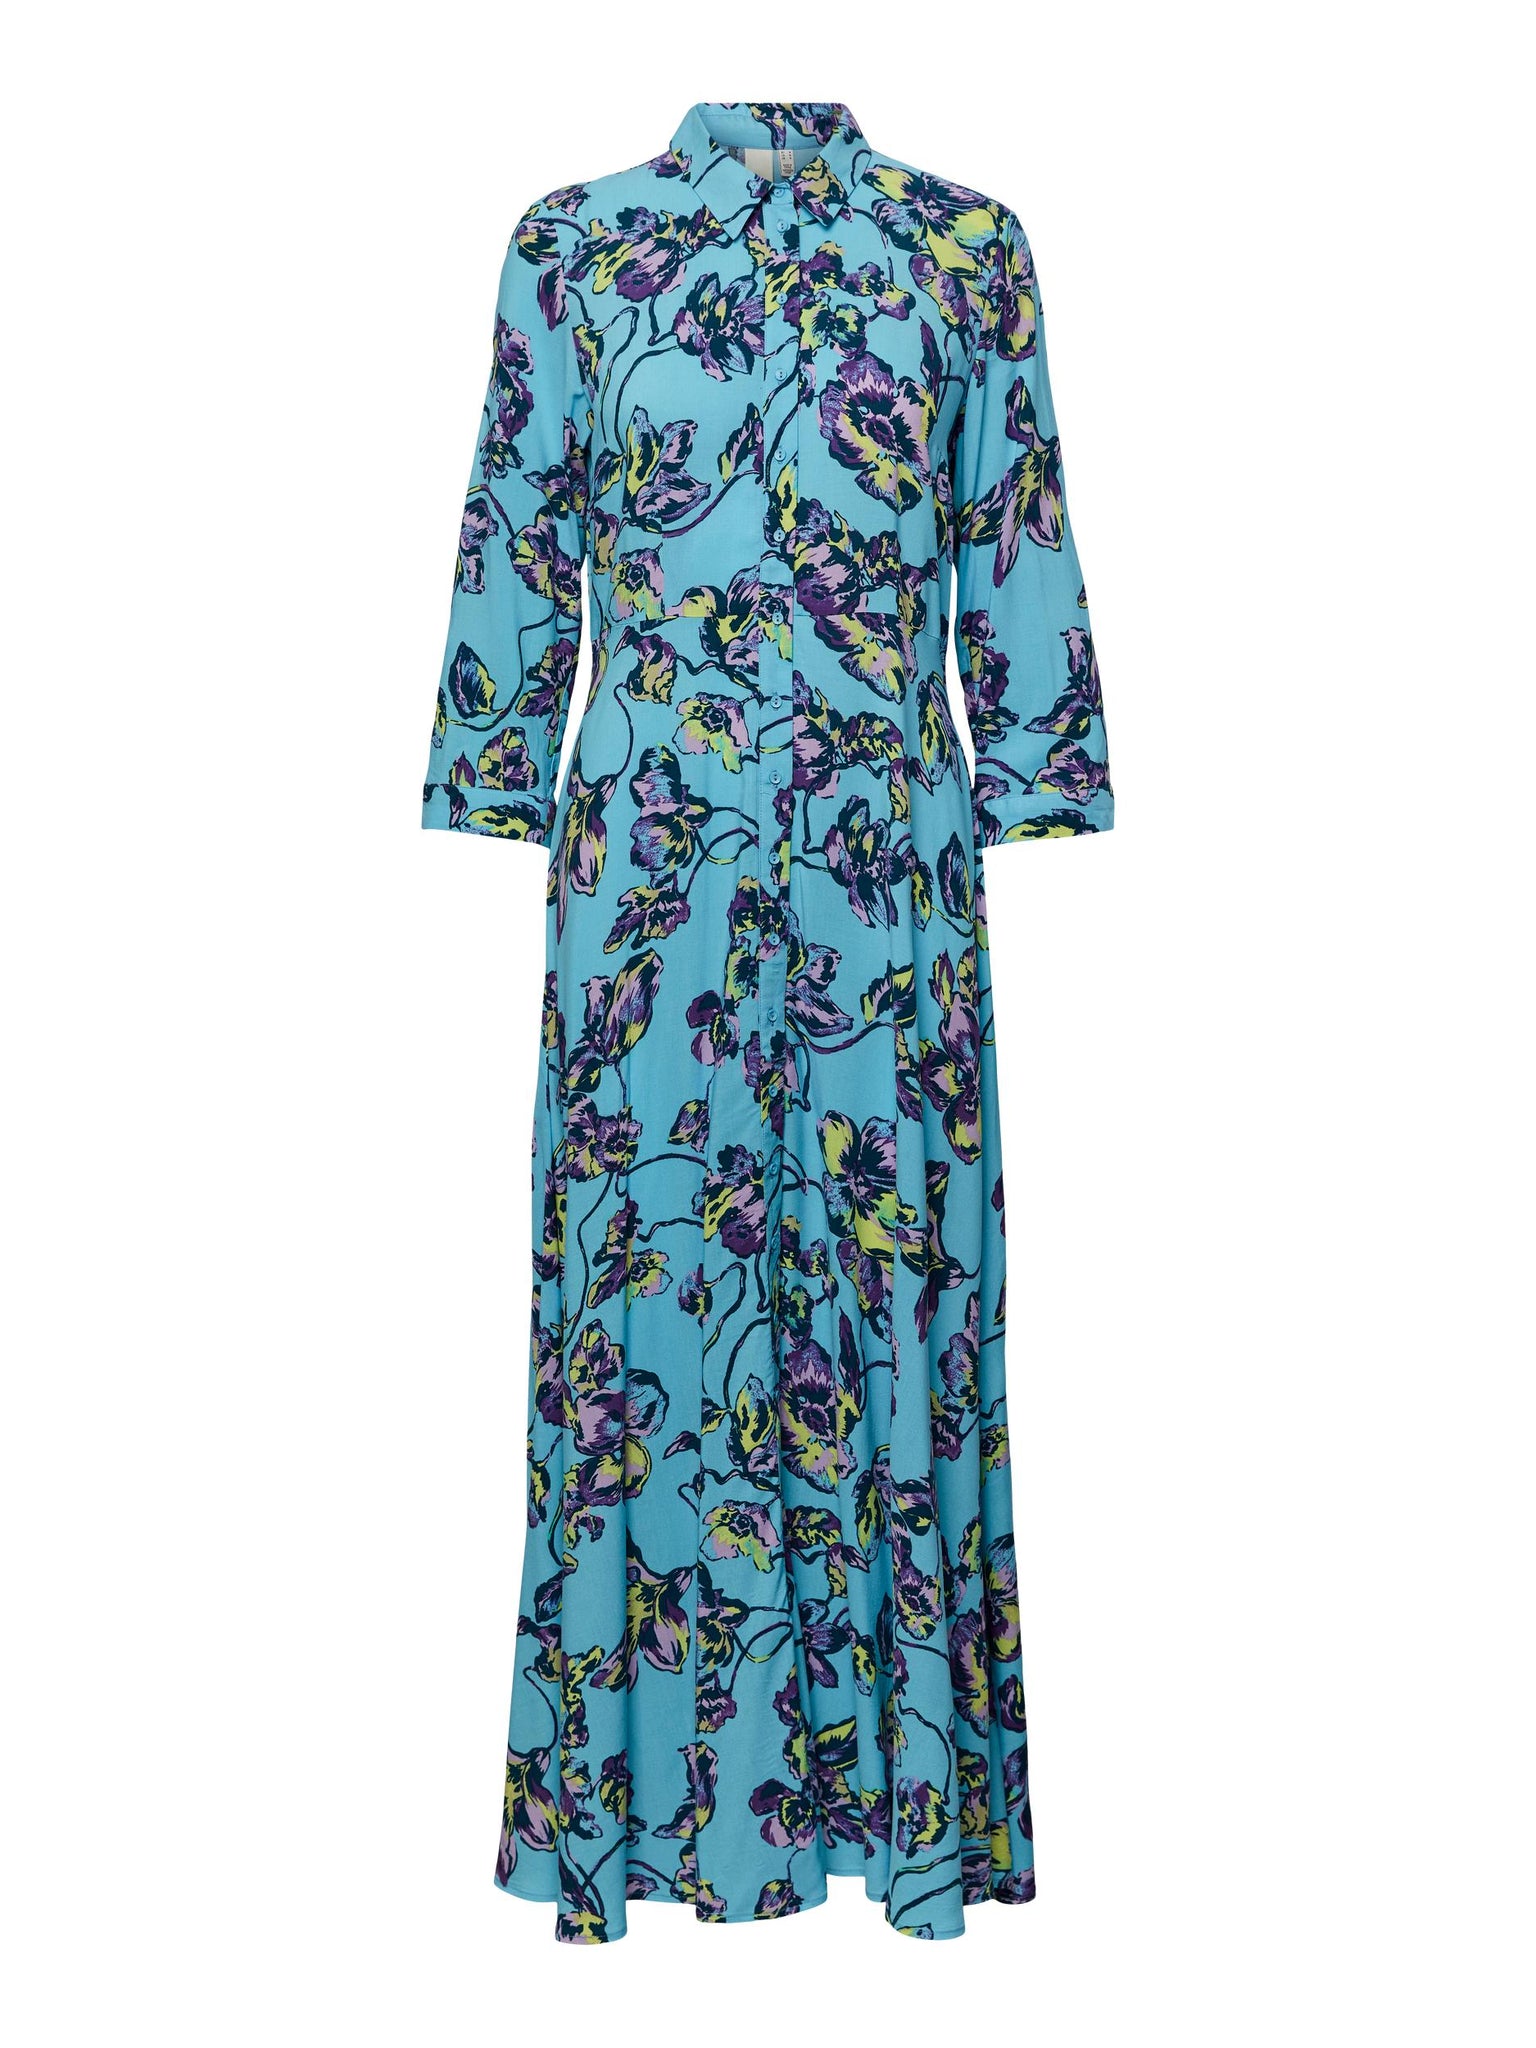 Y.A.S Floral Maxi Shirt Dress in Blue Topaz